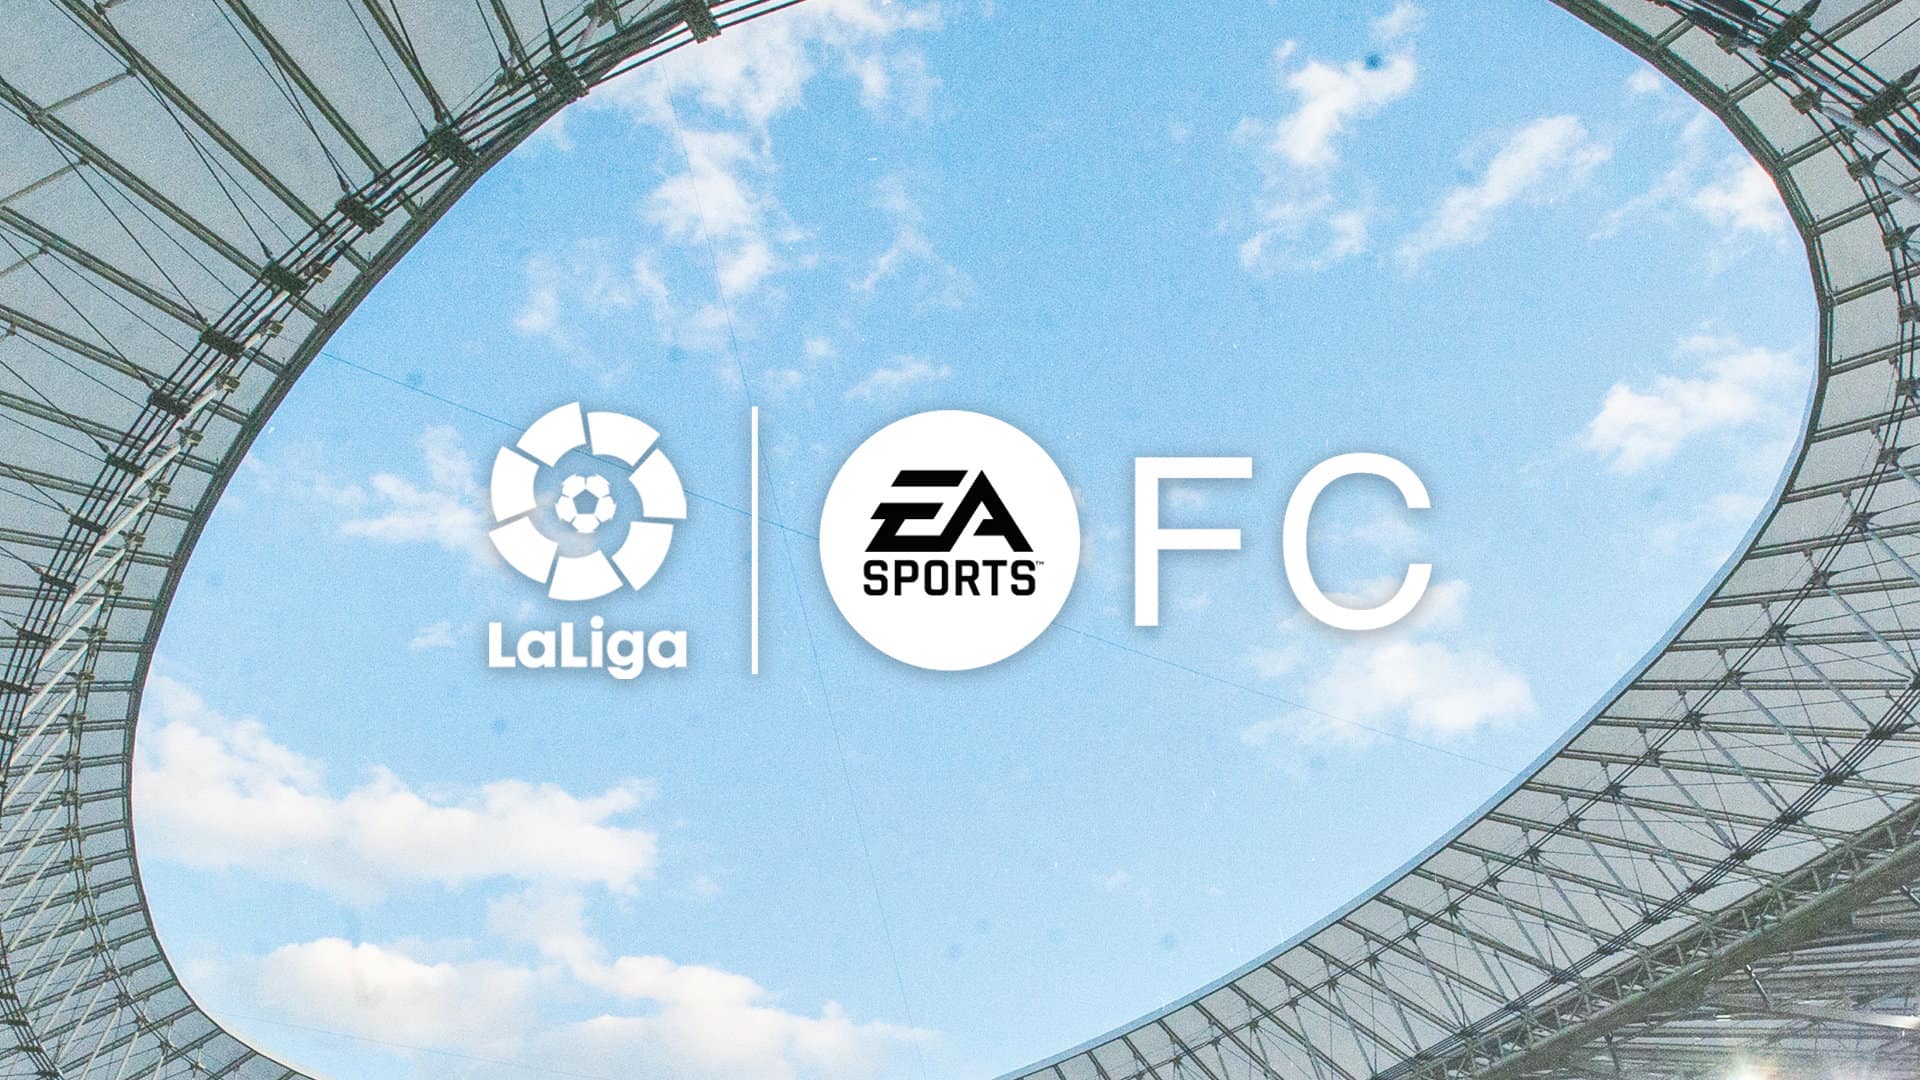 EA Sports FC already has its first partnership with LaLiga